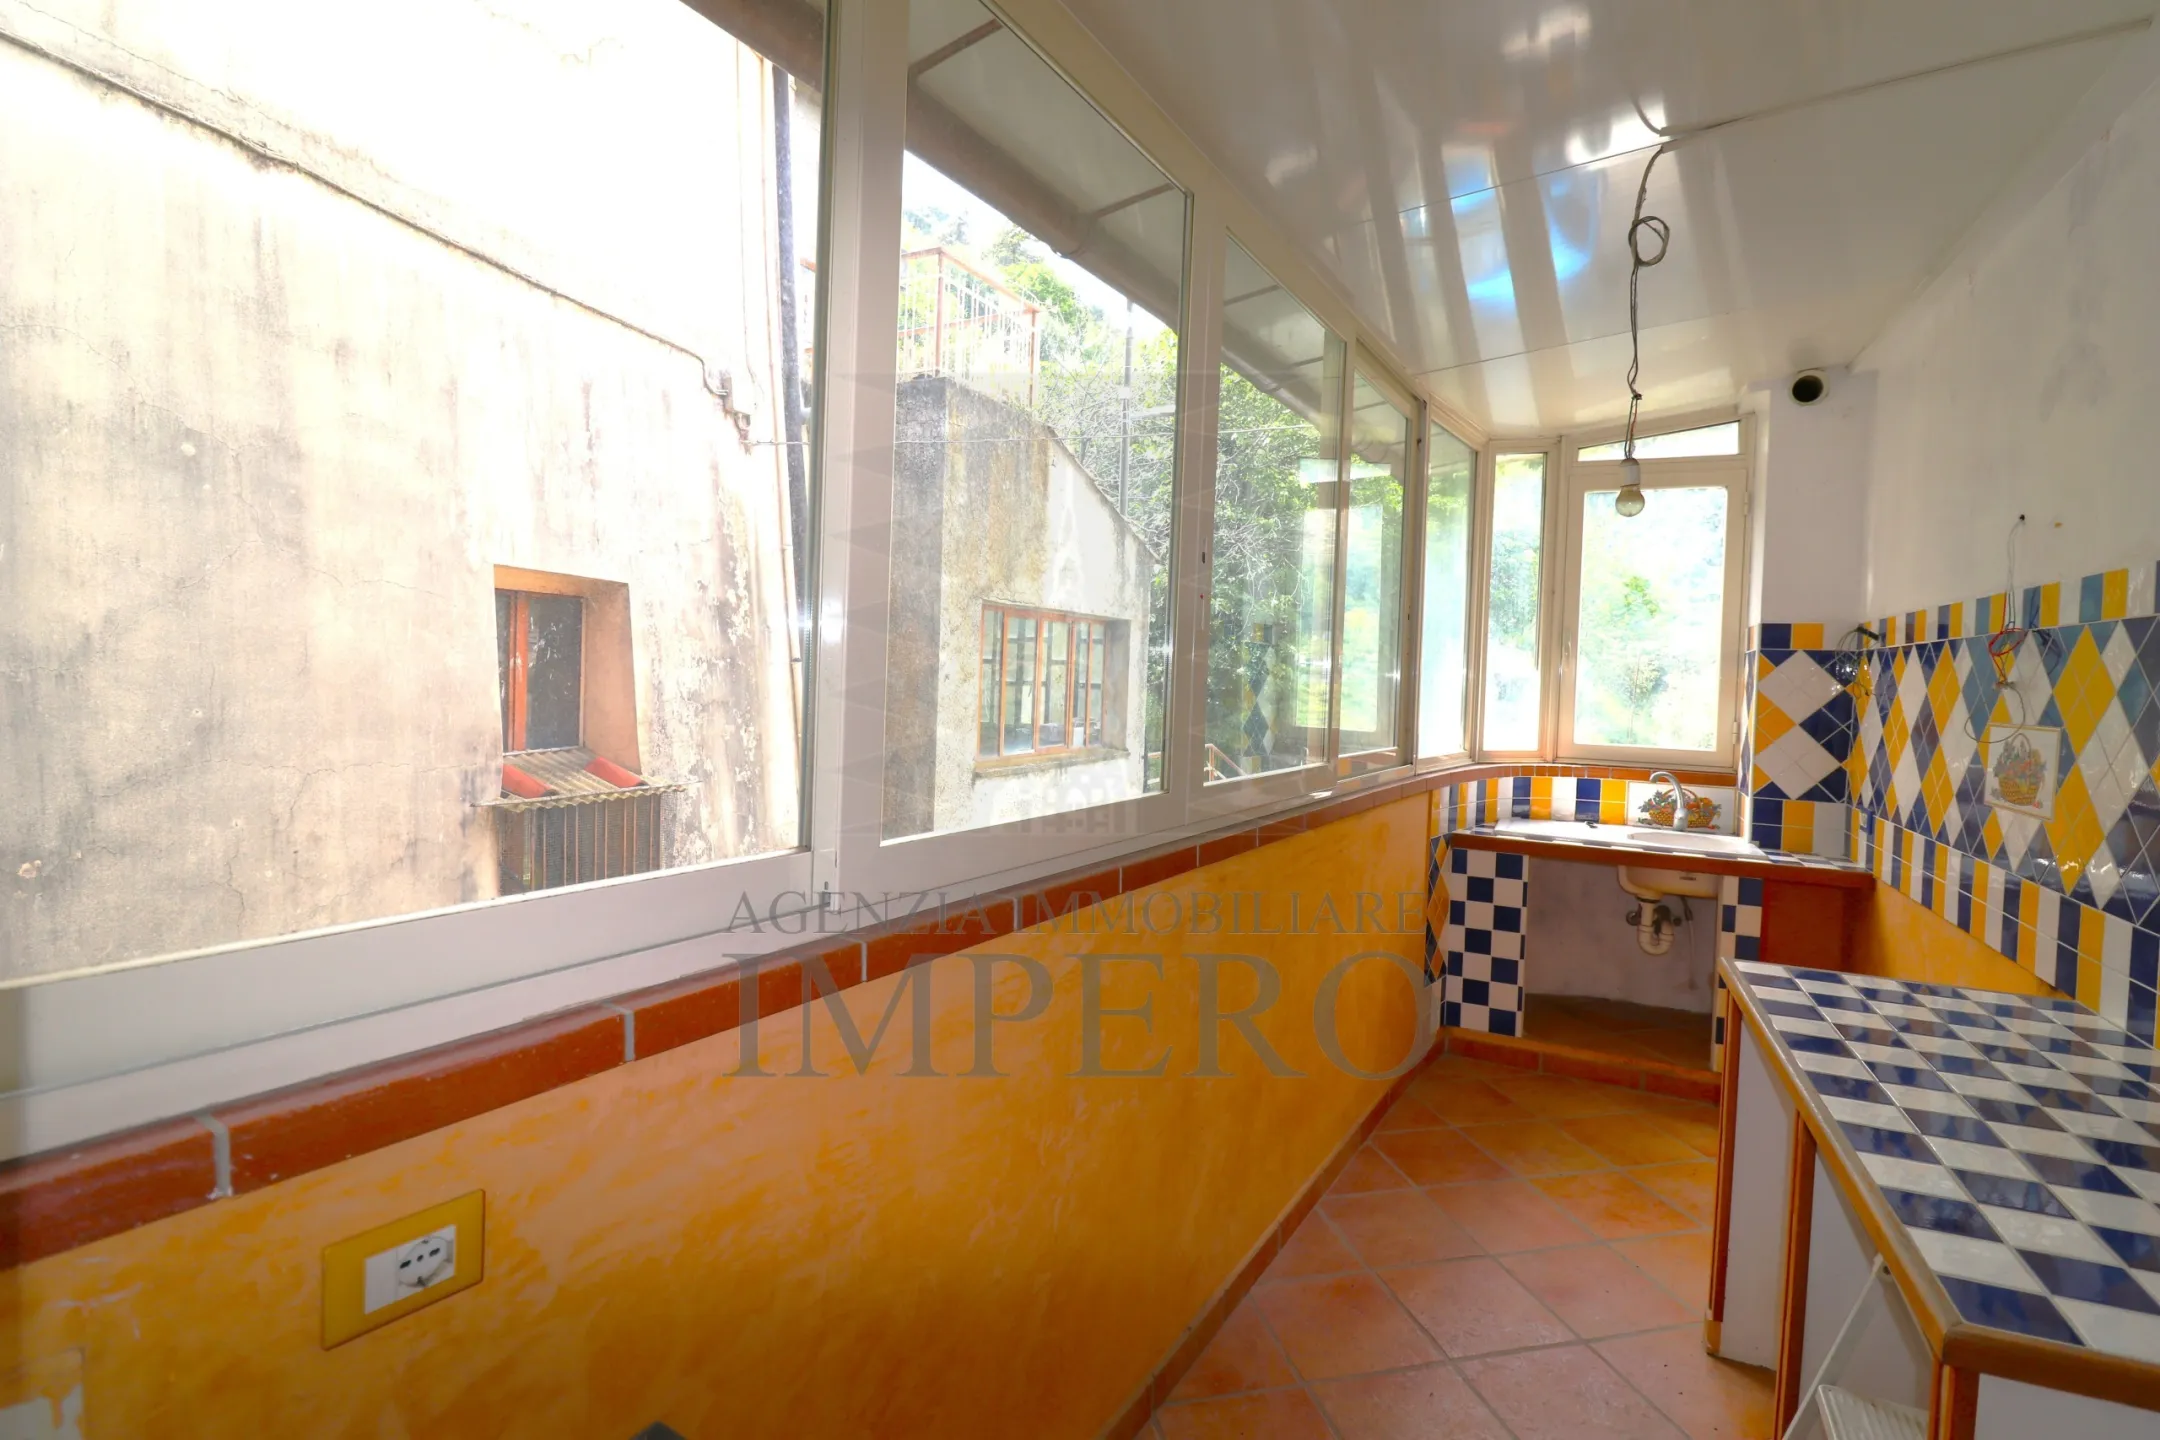 Immagine per Porzione di casa in vendita a Ventimiglia 101B